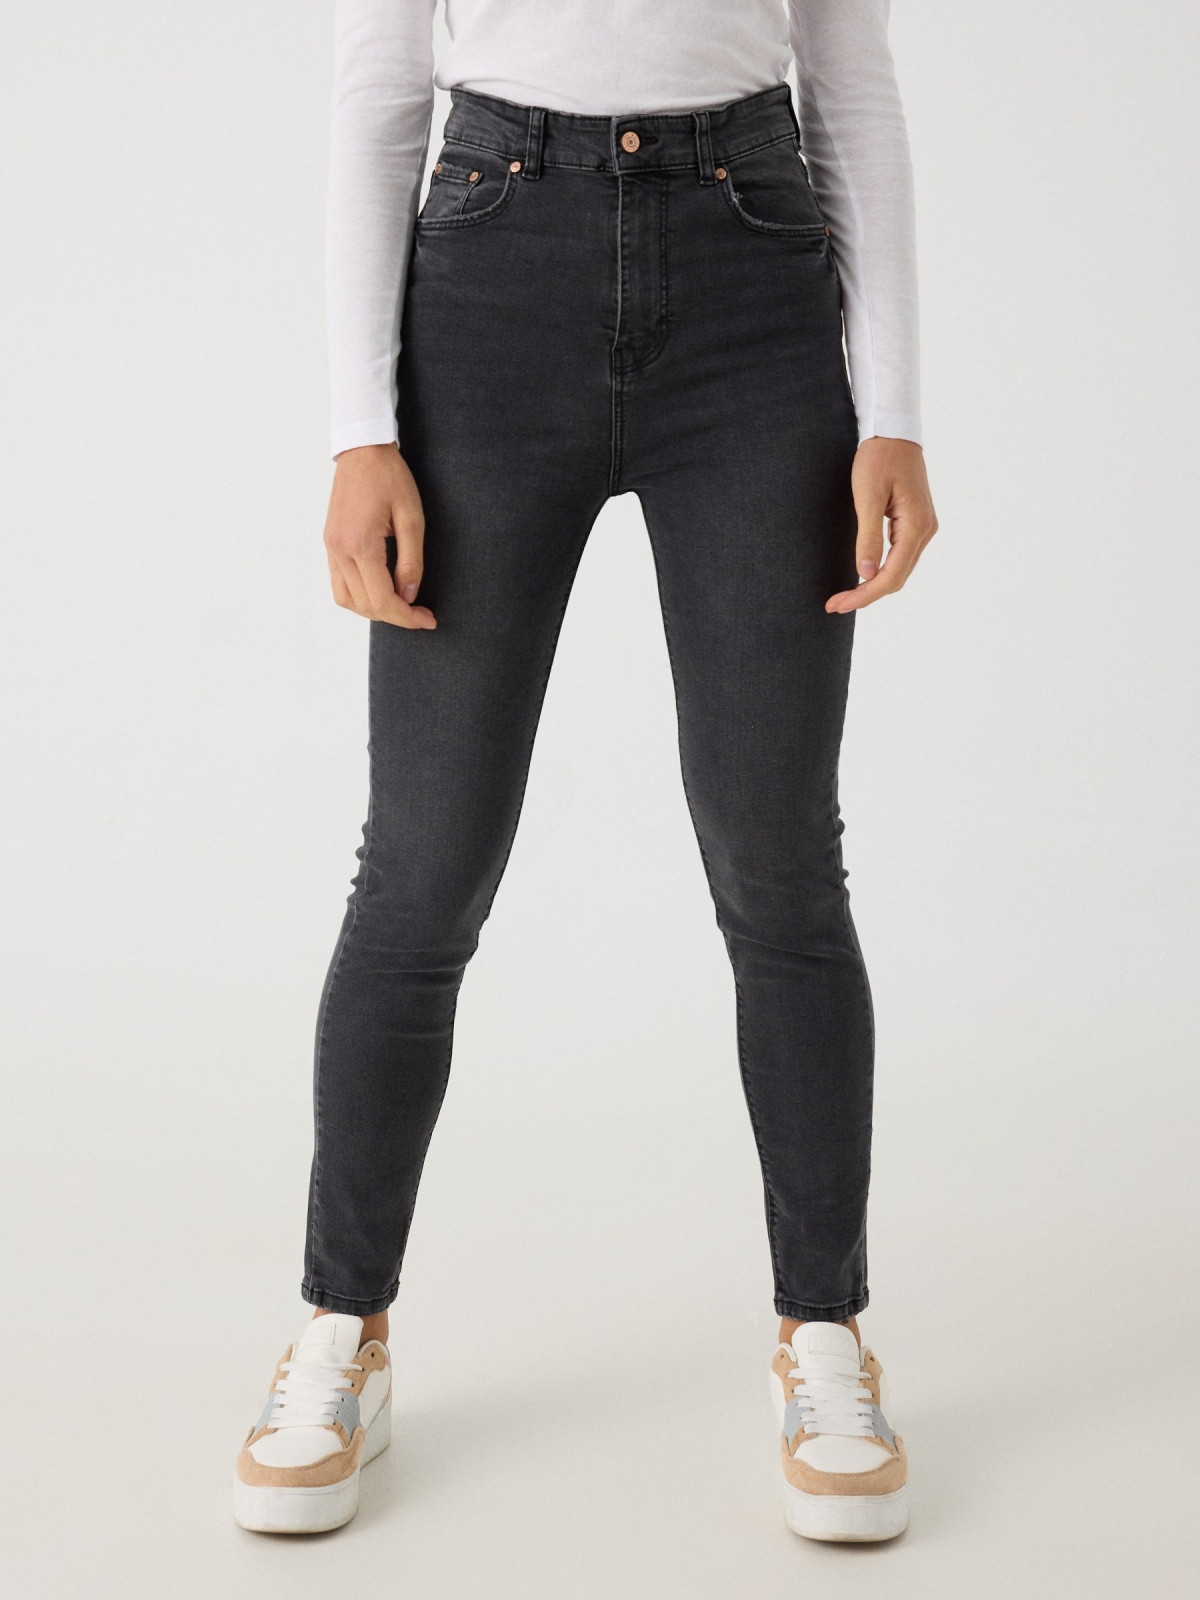 Jeans skinny cintura alta efeito lavado preto preto vista meia frontal